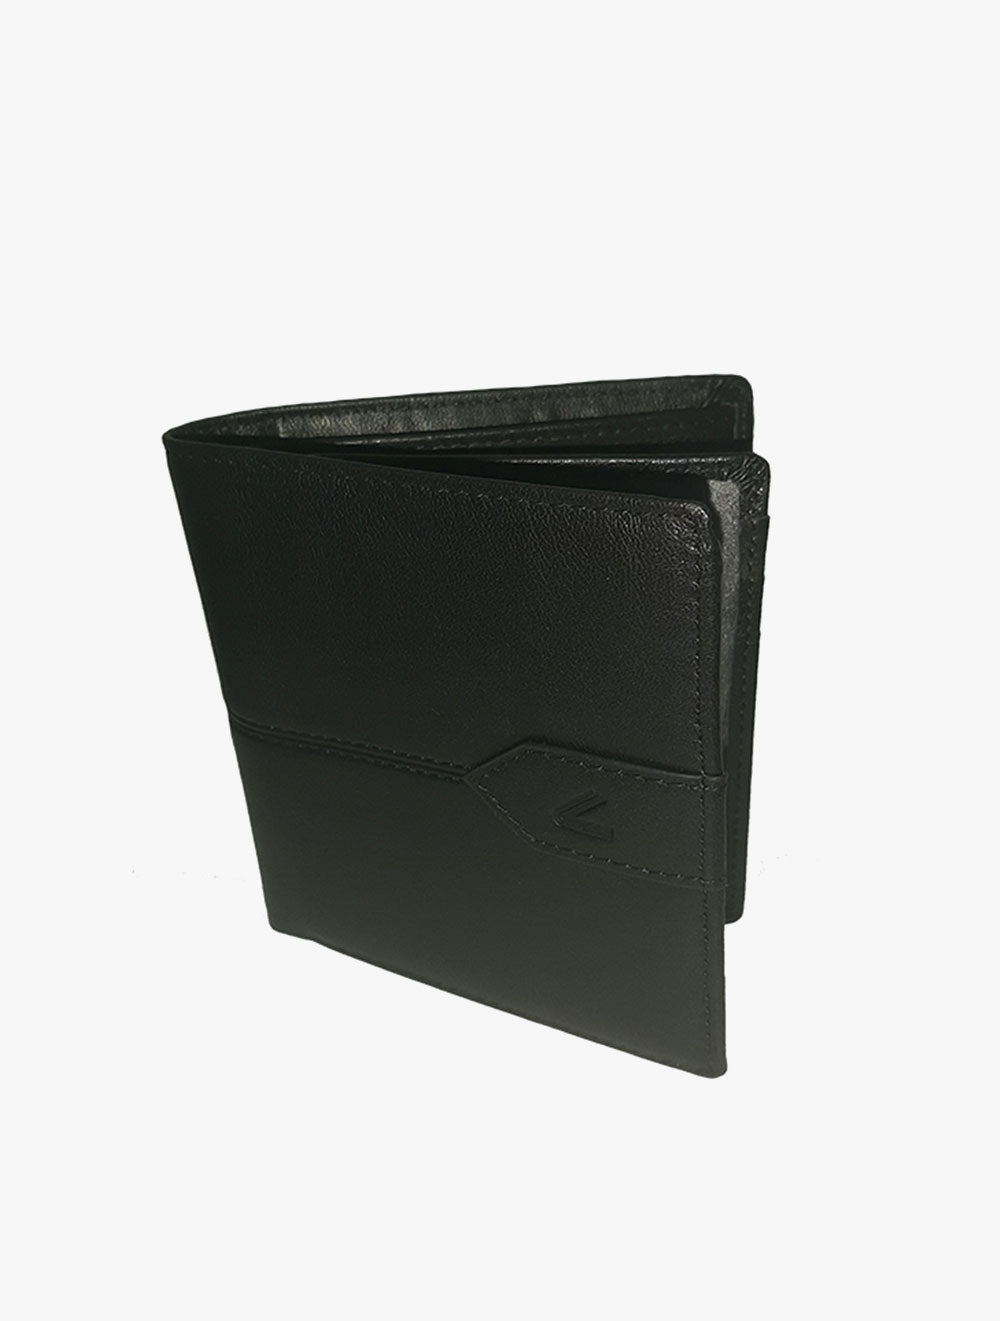 CASERINI
Unisex Wallet - CS257358-15